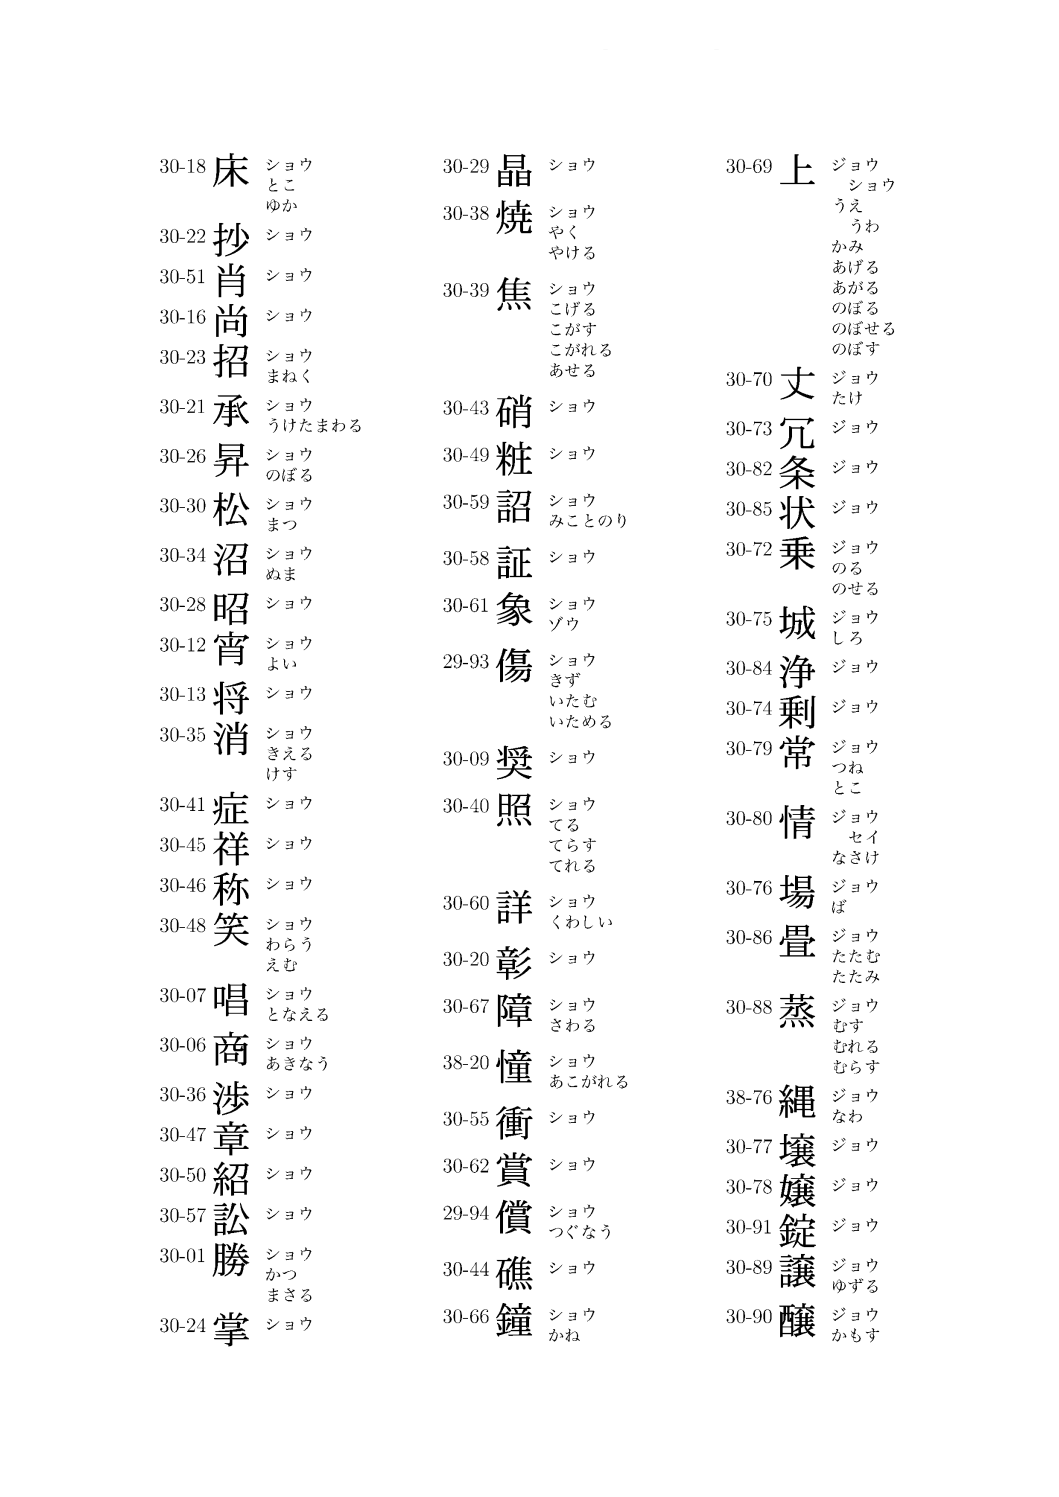 JISX0208:2012 ７ビット及び８ビットの２バイト情報交換用符号化漢字集合